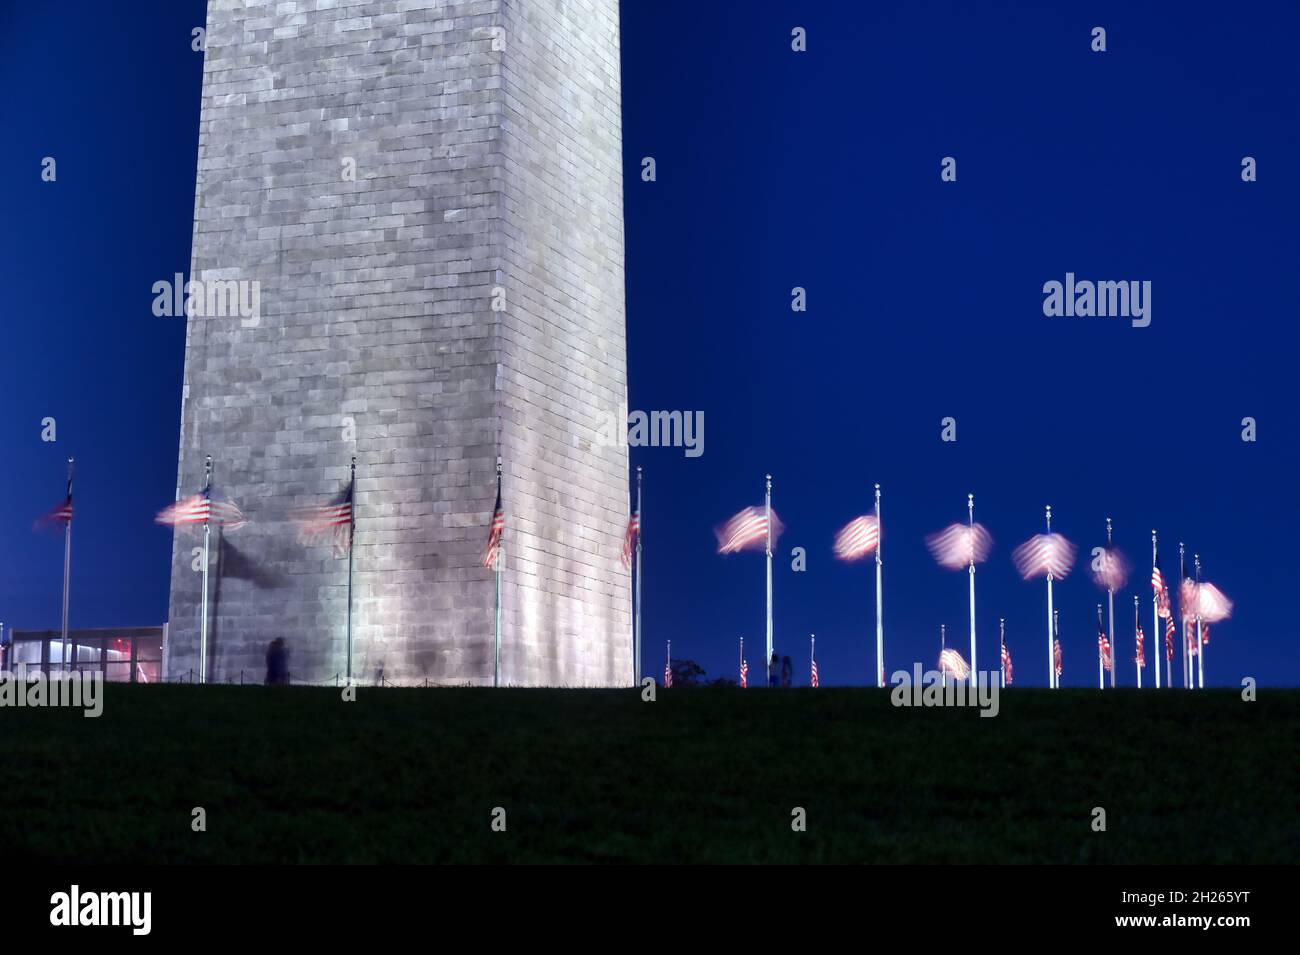 The Washington Monument on the National Mall in Washington, D.C. Stock Photo